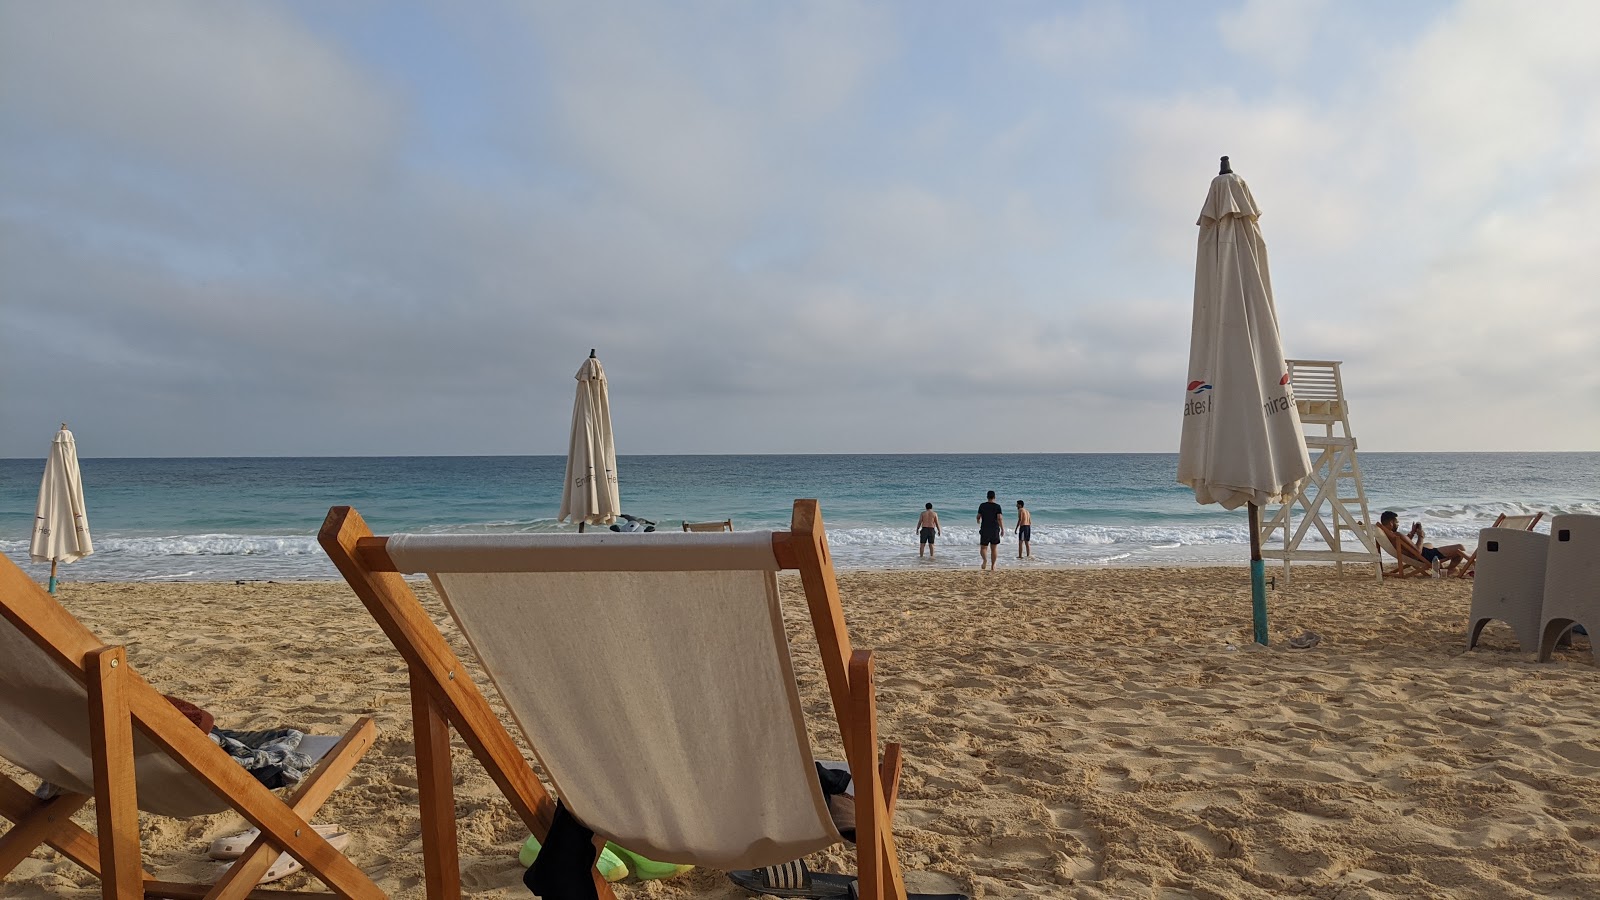 Foto de Emirates Heights Beach - lugar popular entre os apreciadores de relaxamento